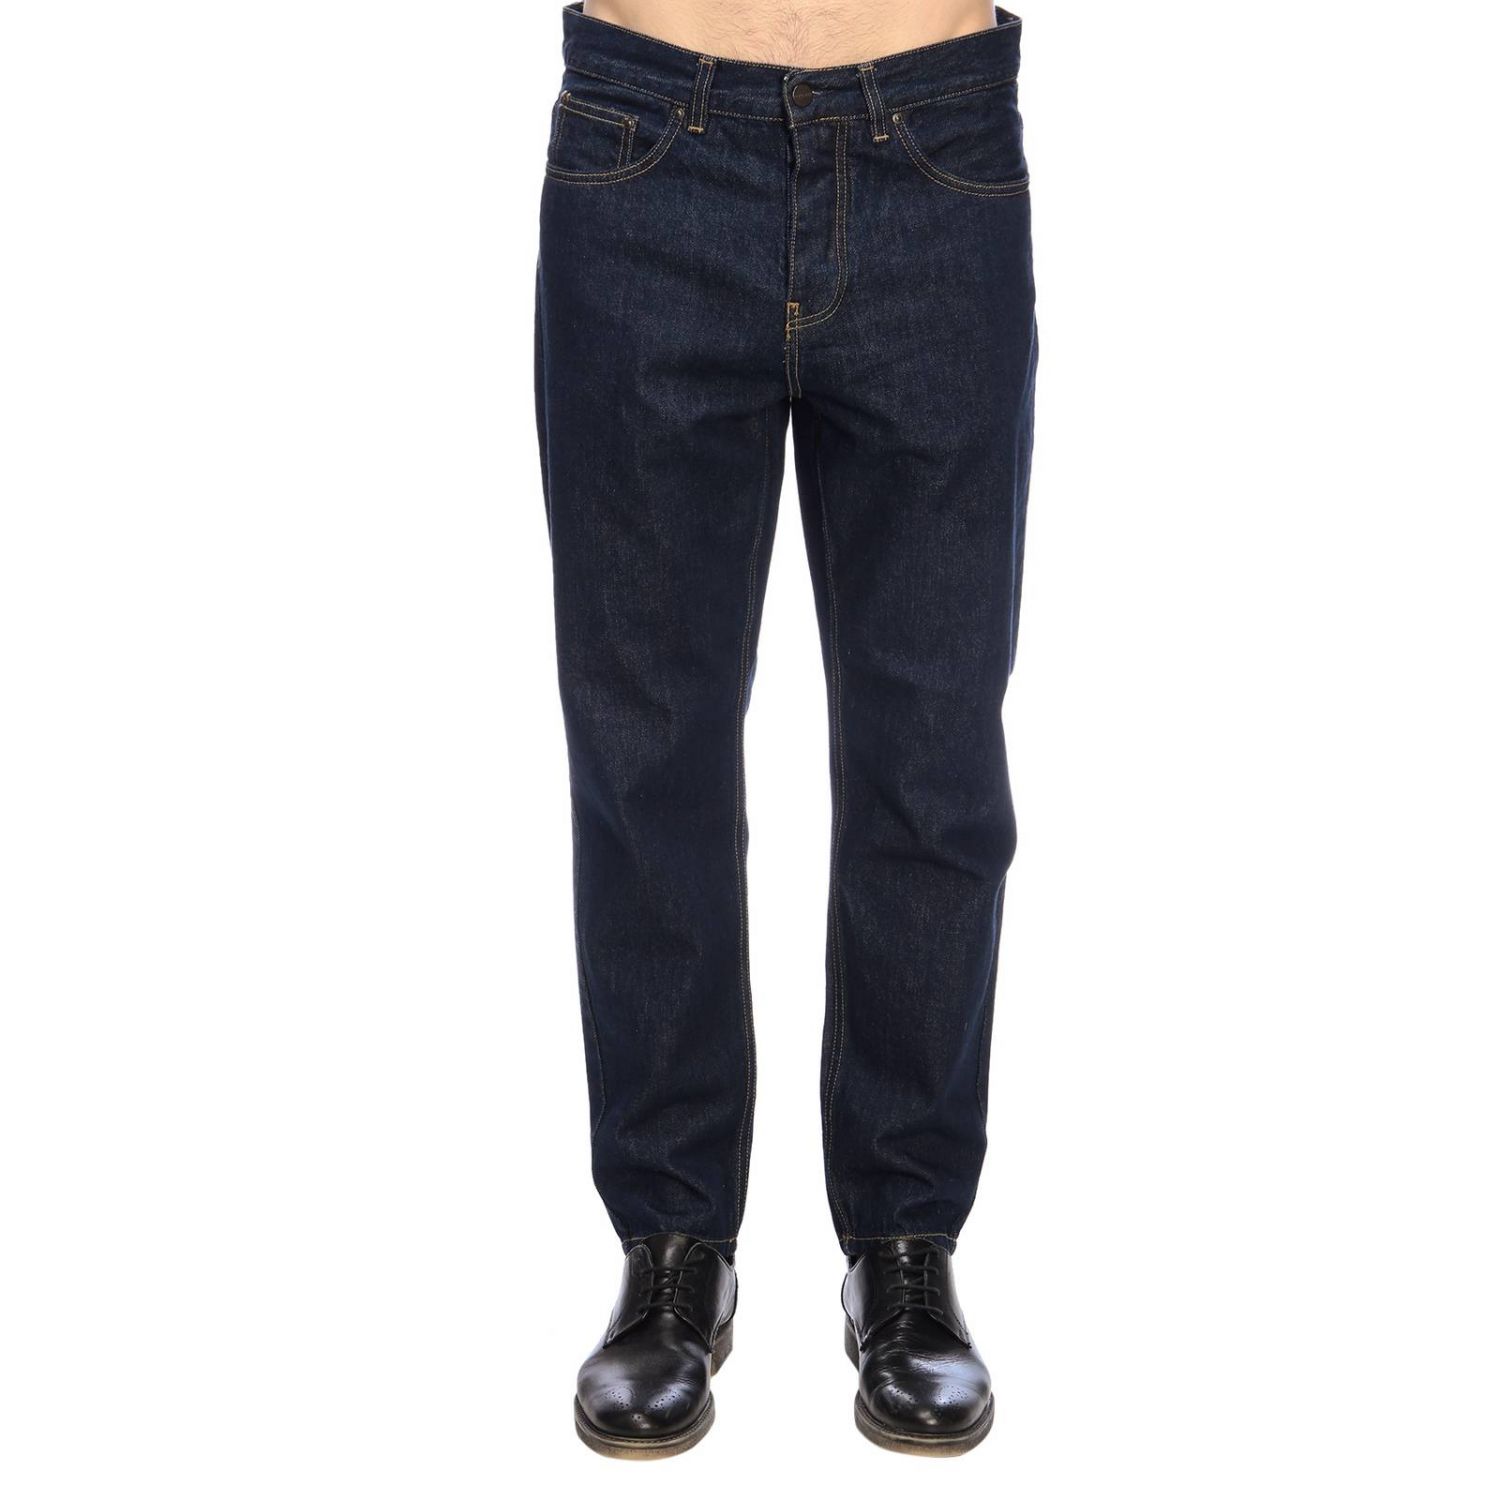 Carhartt Outlet: Pants men - Blue | Pants Carhartt I02490400 GIGLIO.COM